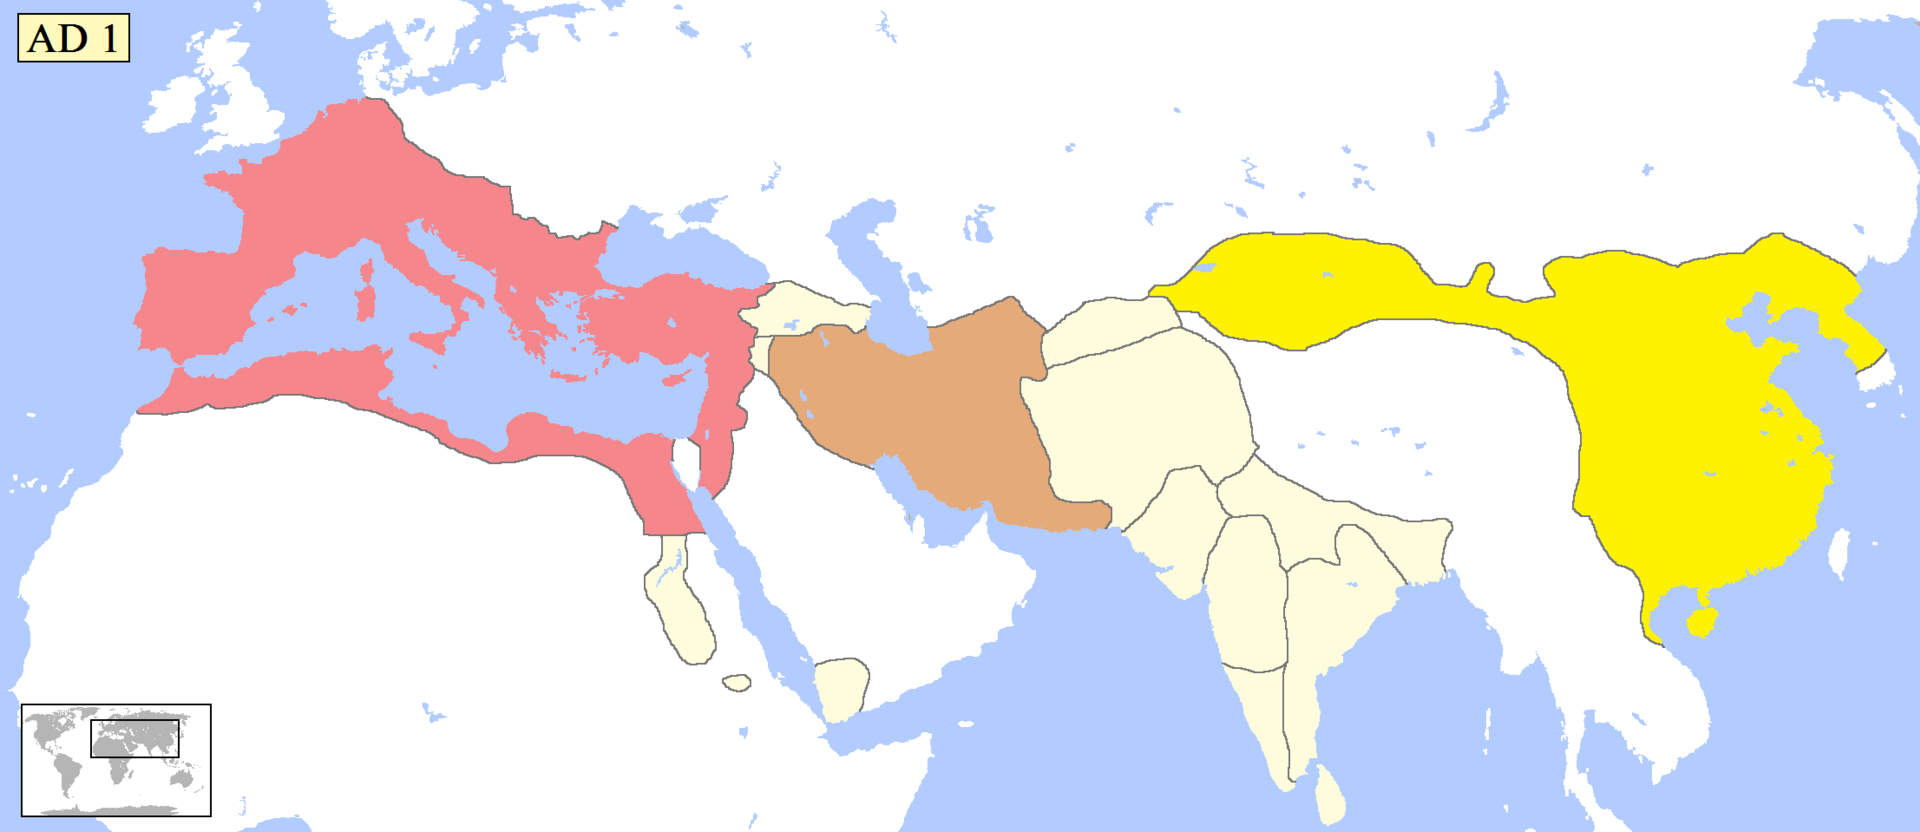 LImpero romano Impero dei Parti e lImpero cinese Tra i Parti e i Cinesi impero Kushan Copia